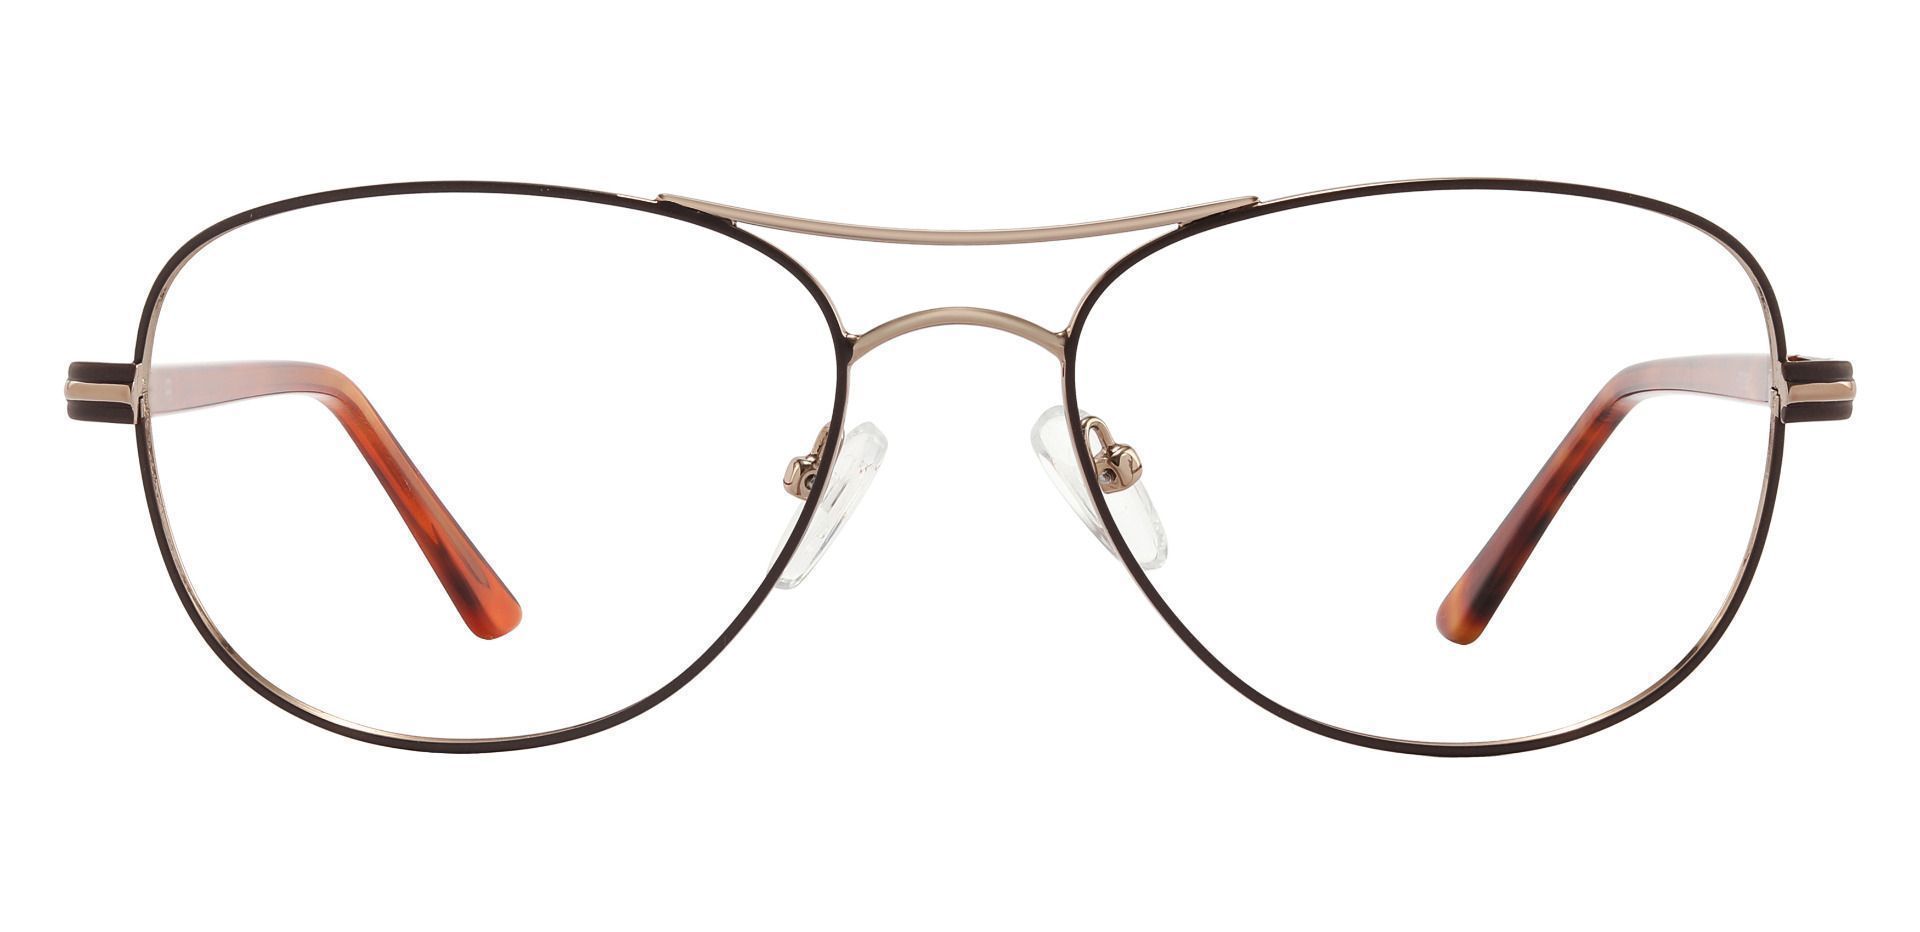 Reeves Aviator Prescription Glasses - Brown